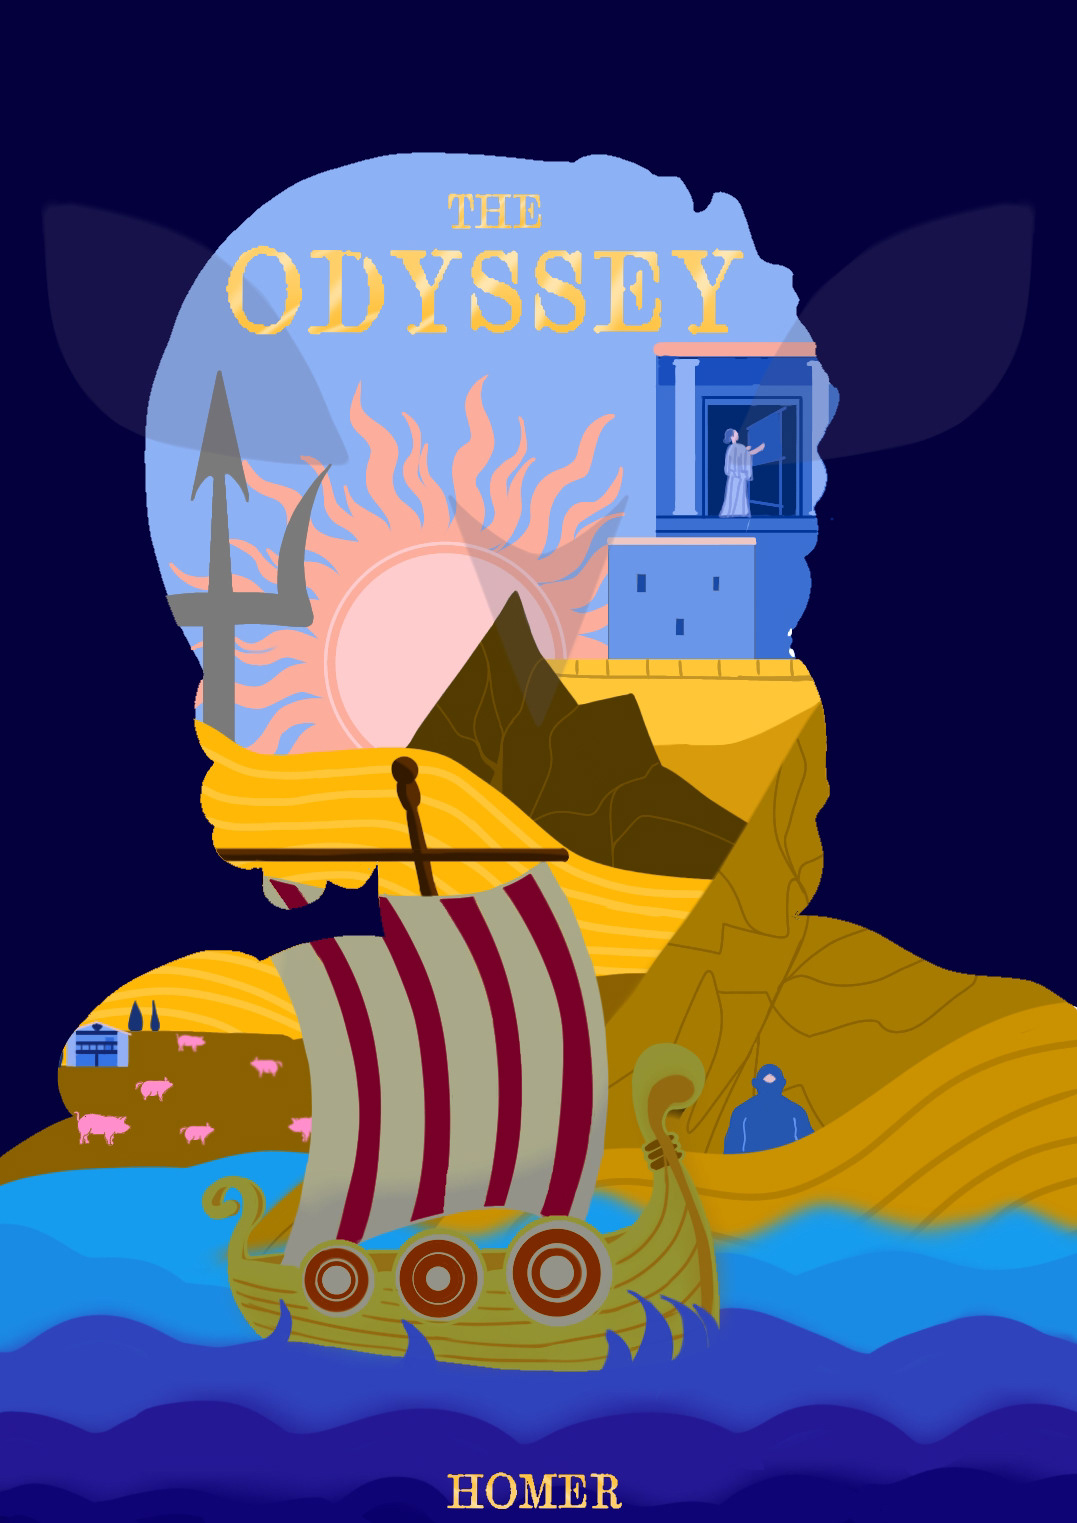 TheOdyssey odysseus ithaca greek mythology digital illustration